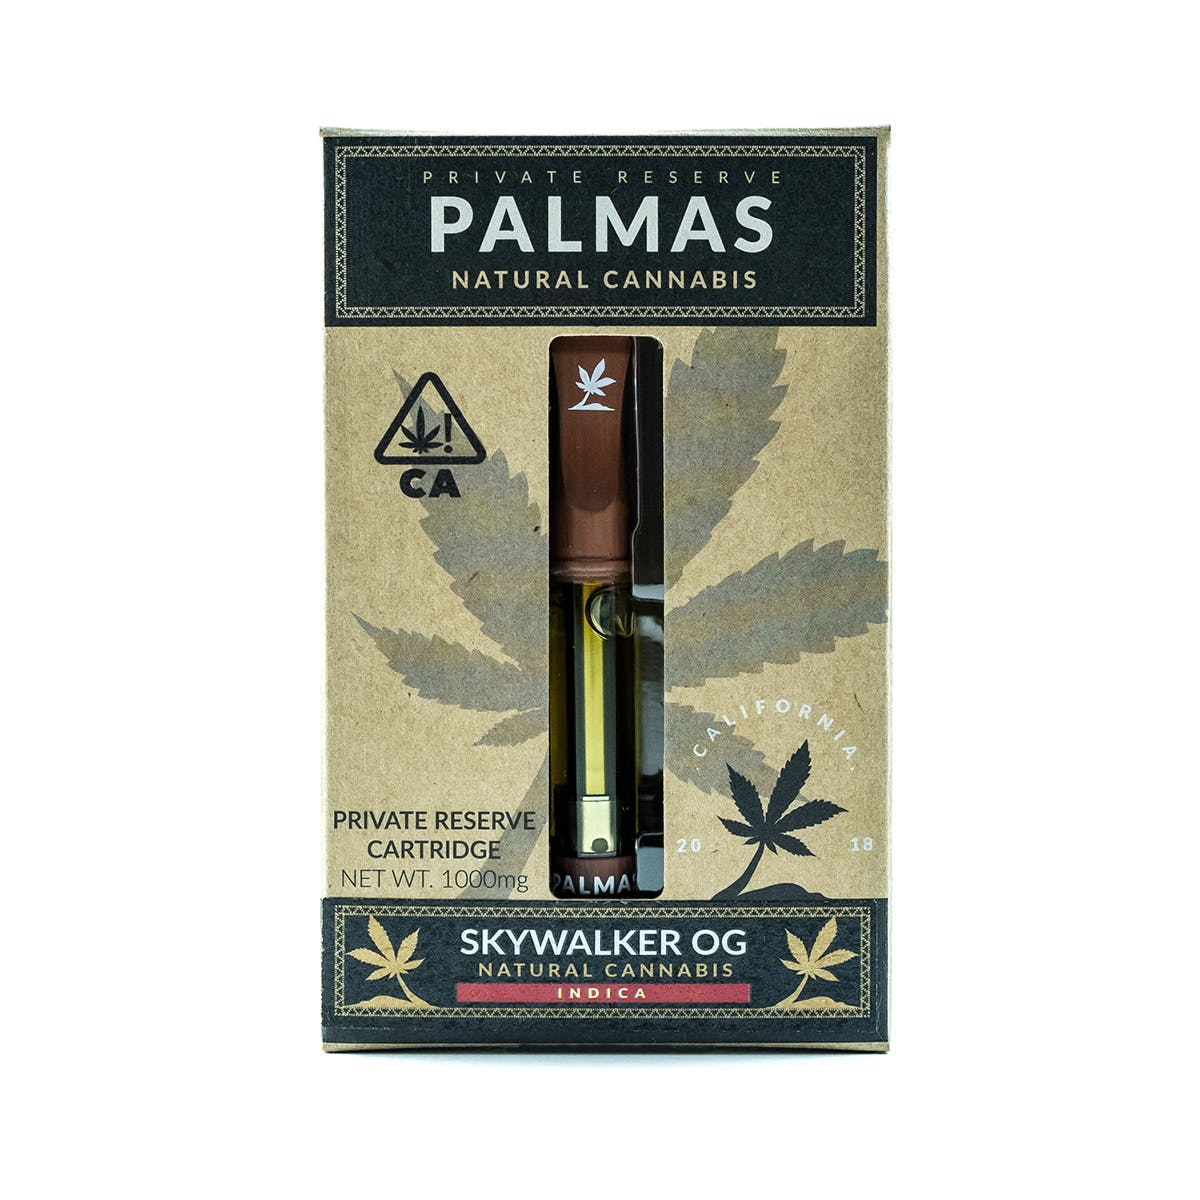 marijuana-dispensaries-straight-up-20-in-compton-palmas-private-reserve-cartridge-skywalker-og